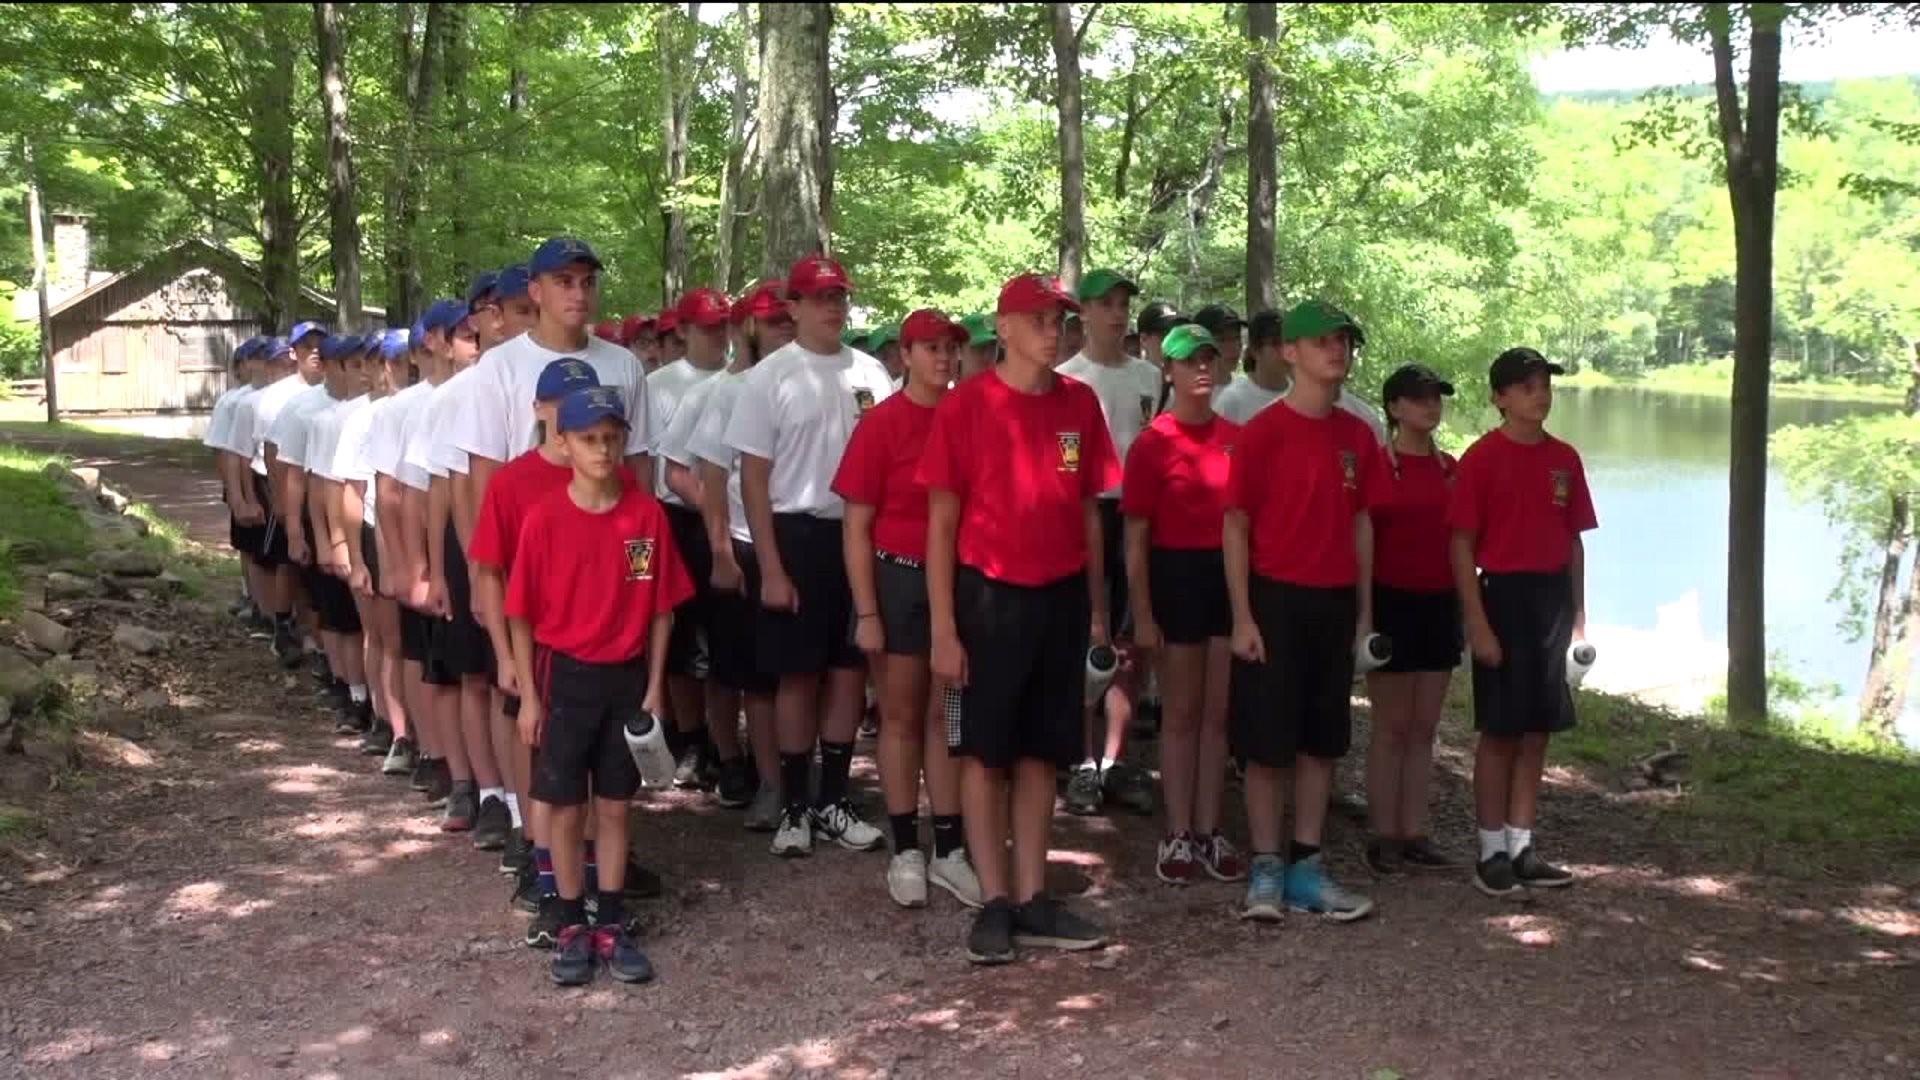 Camp Cadet Kicks Off in Luzerne County